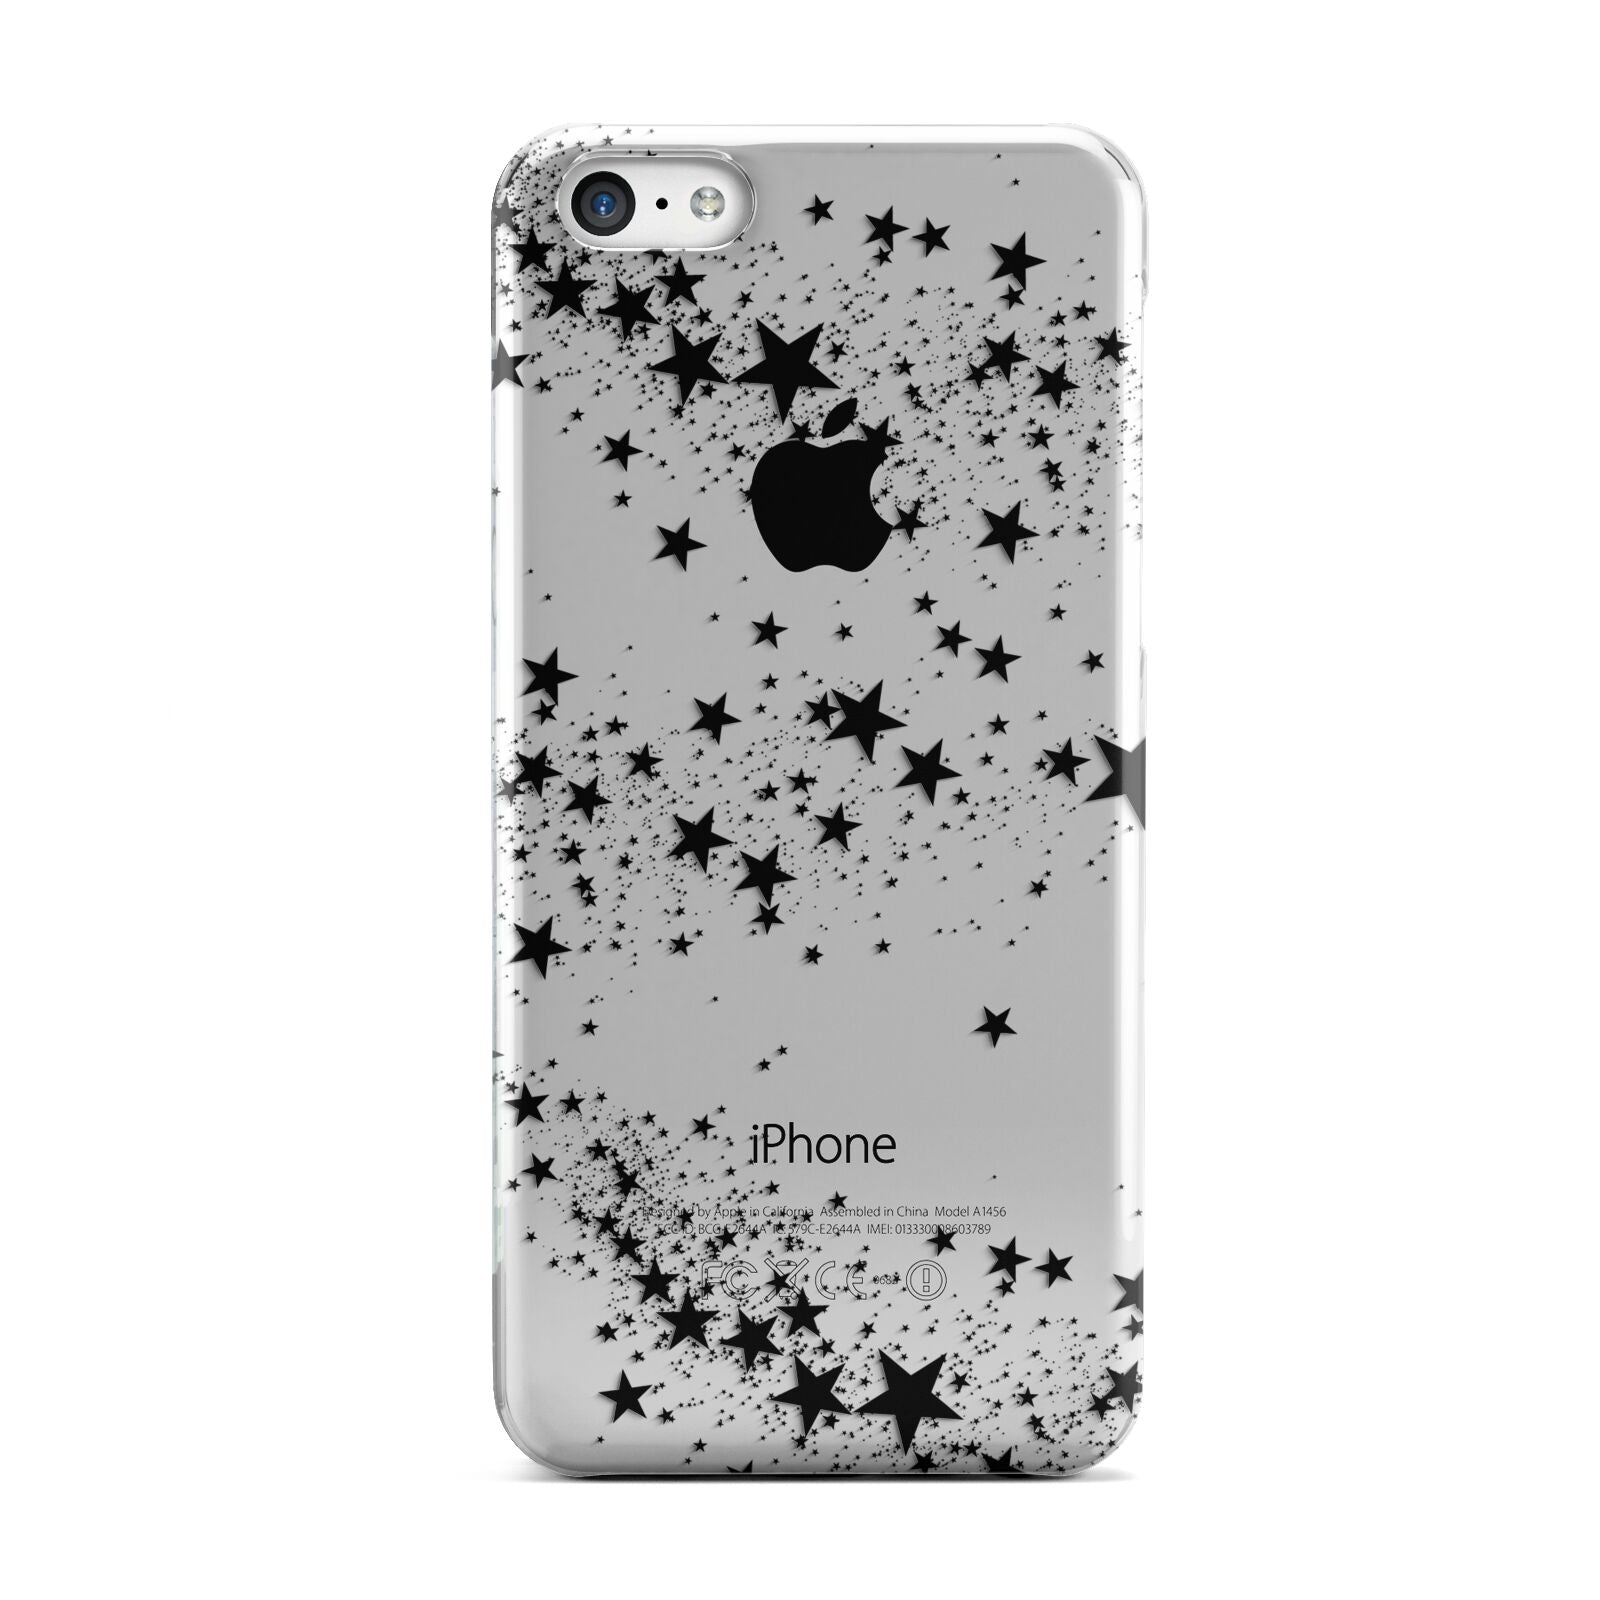 Shooting Stars Apple iPhone 5c Case